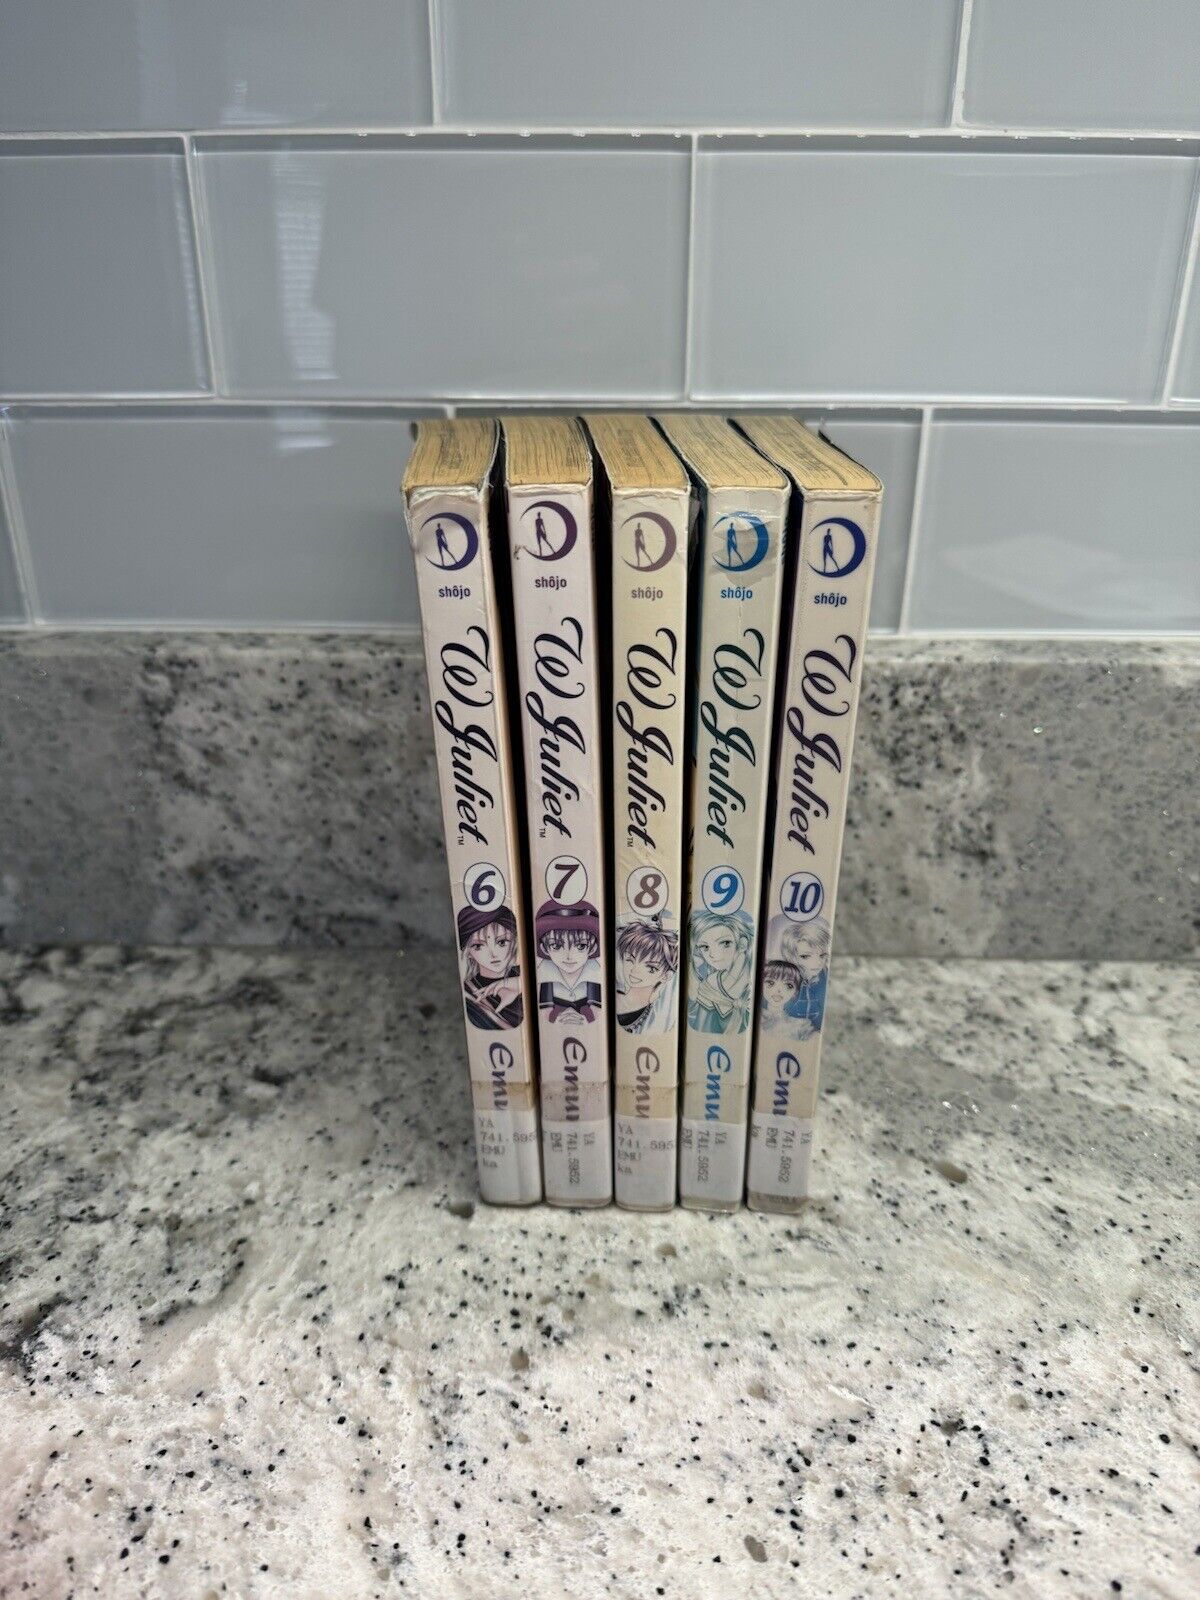 W Juliet Volumes 6 7 8 9 10 English Manga Anime Set English Rare